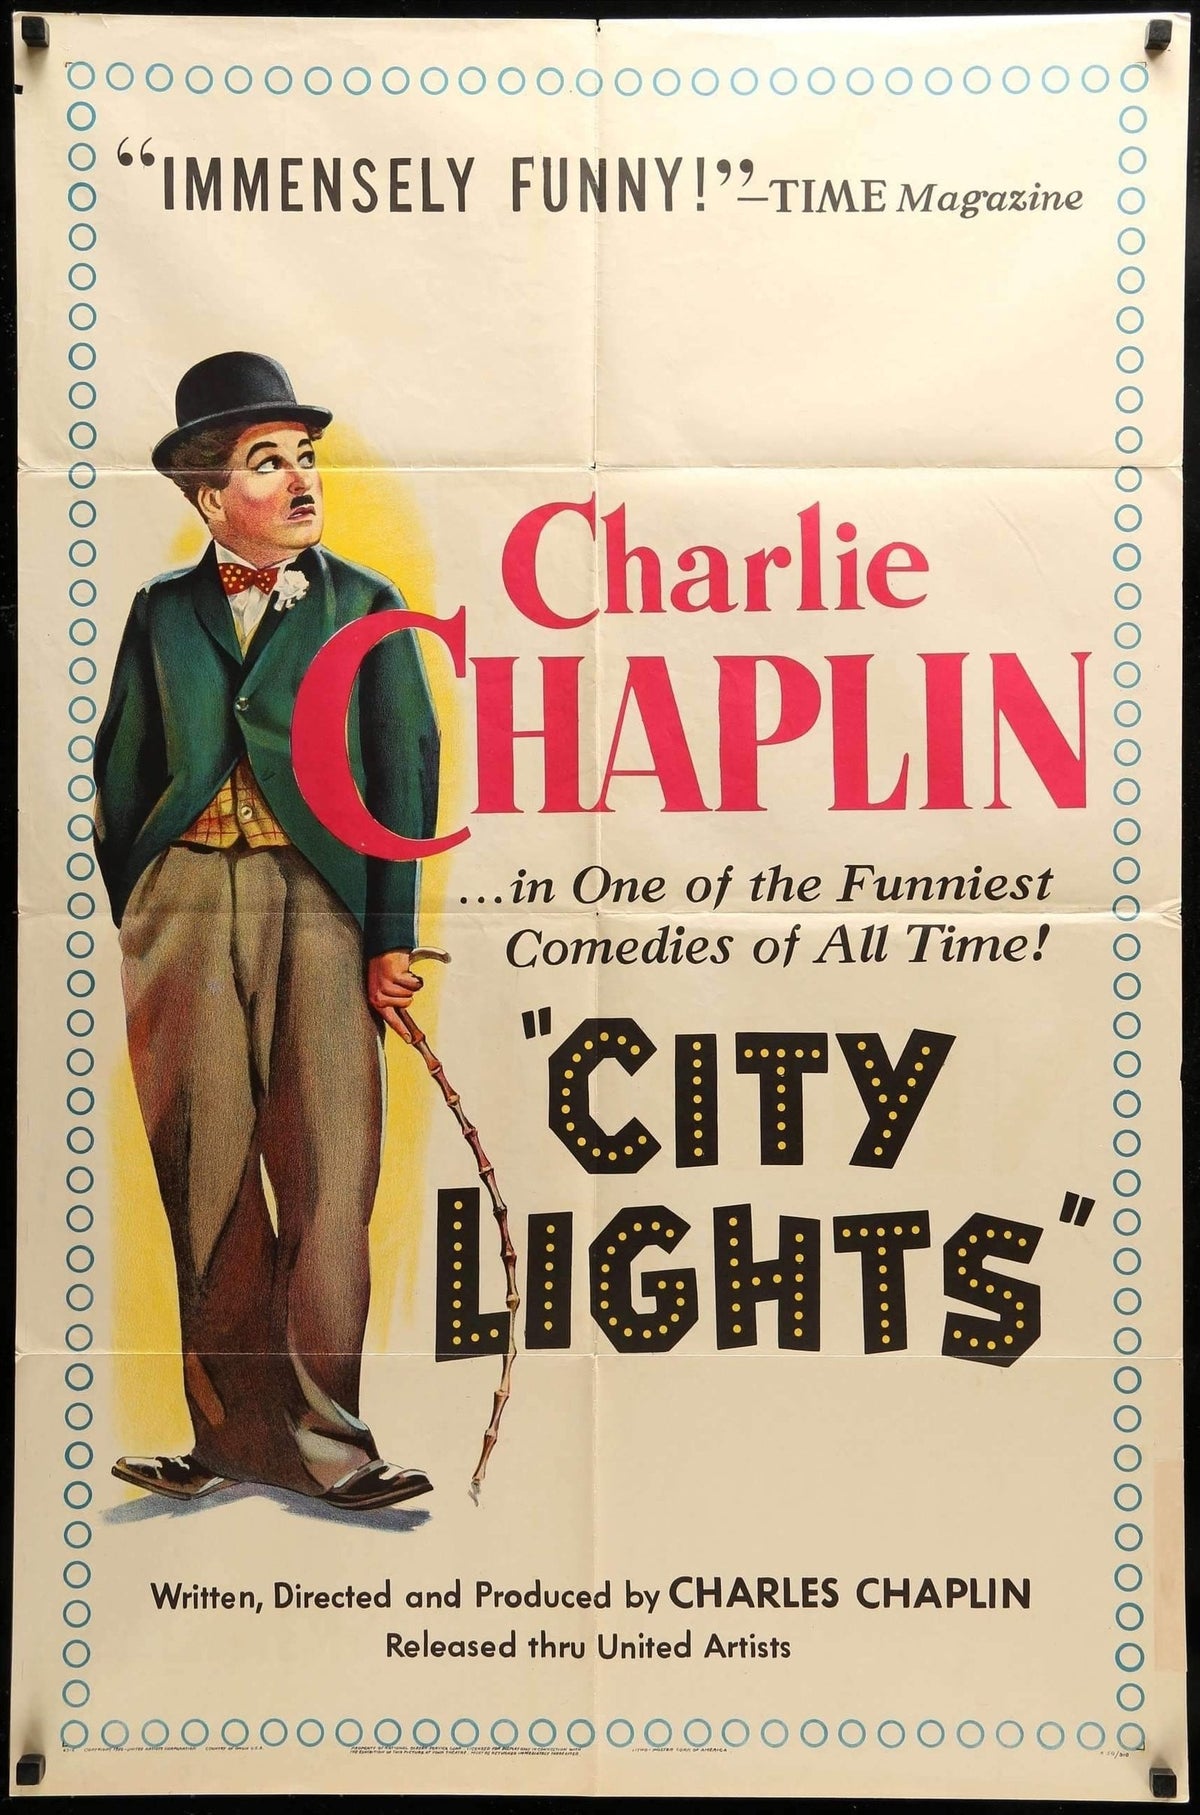 City Lights (1931) original movie poster for sale at Original Film Art